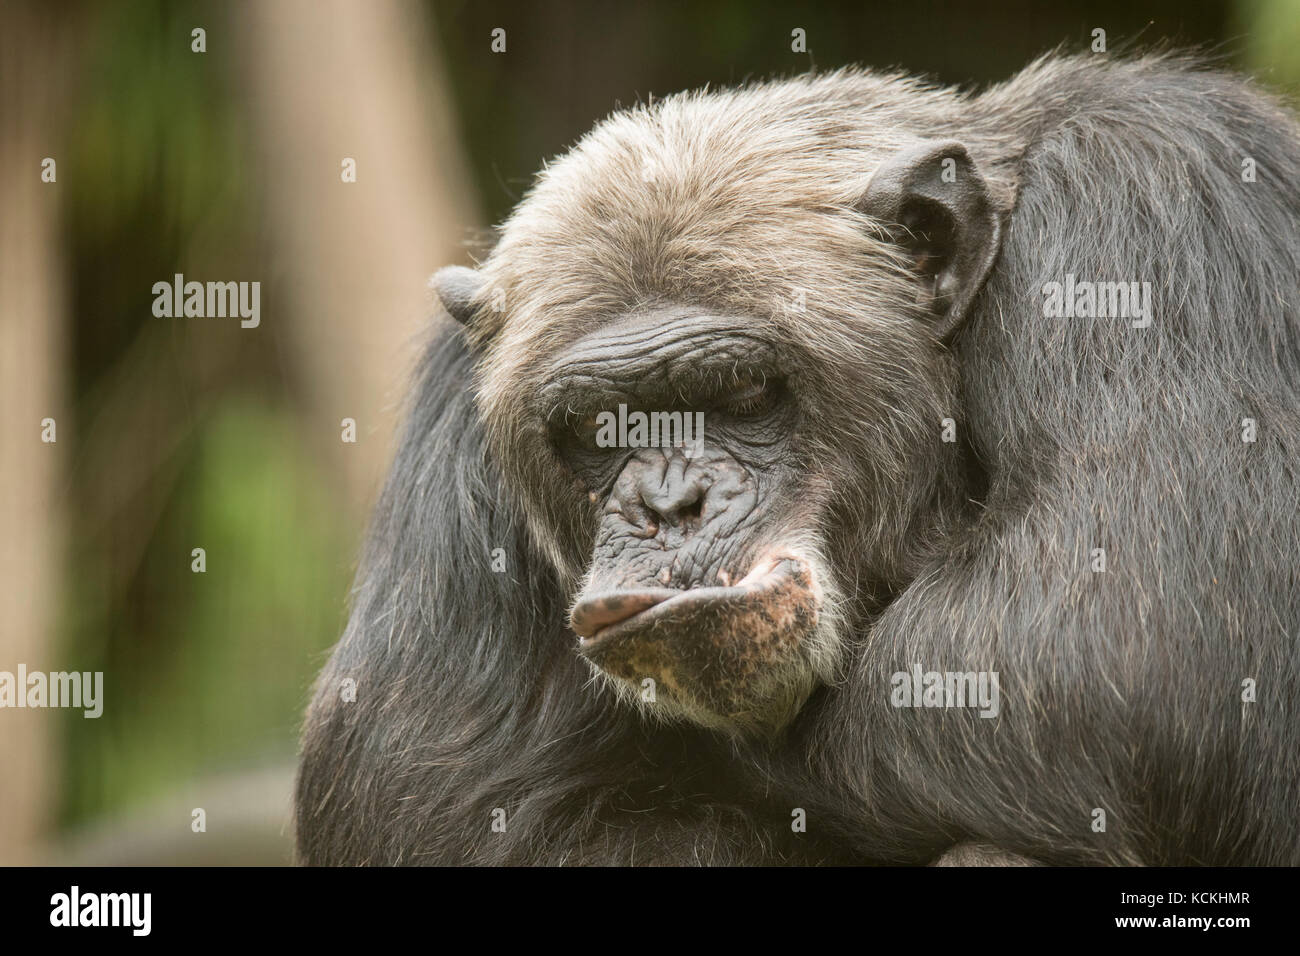 Old Chimpanzee, funny mouth, closeup Stock Photo